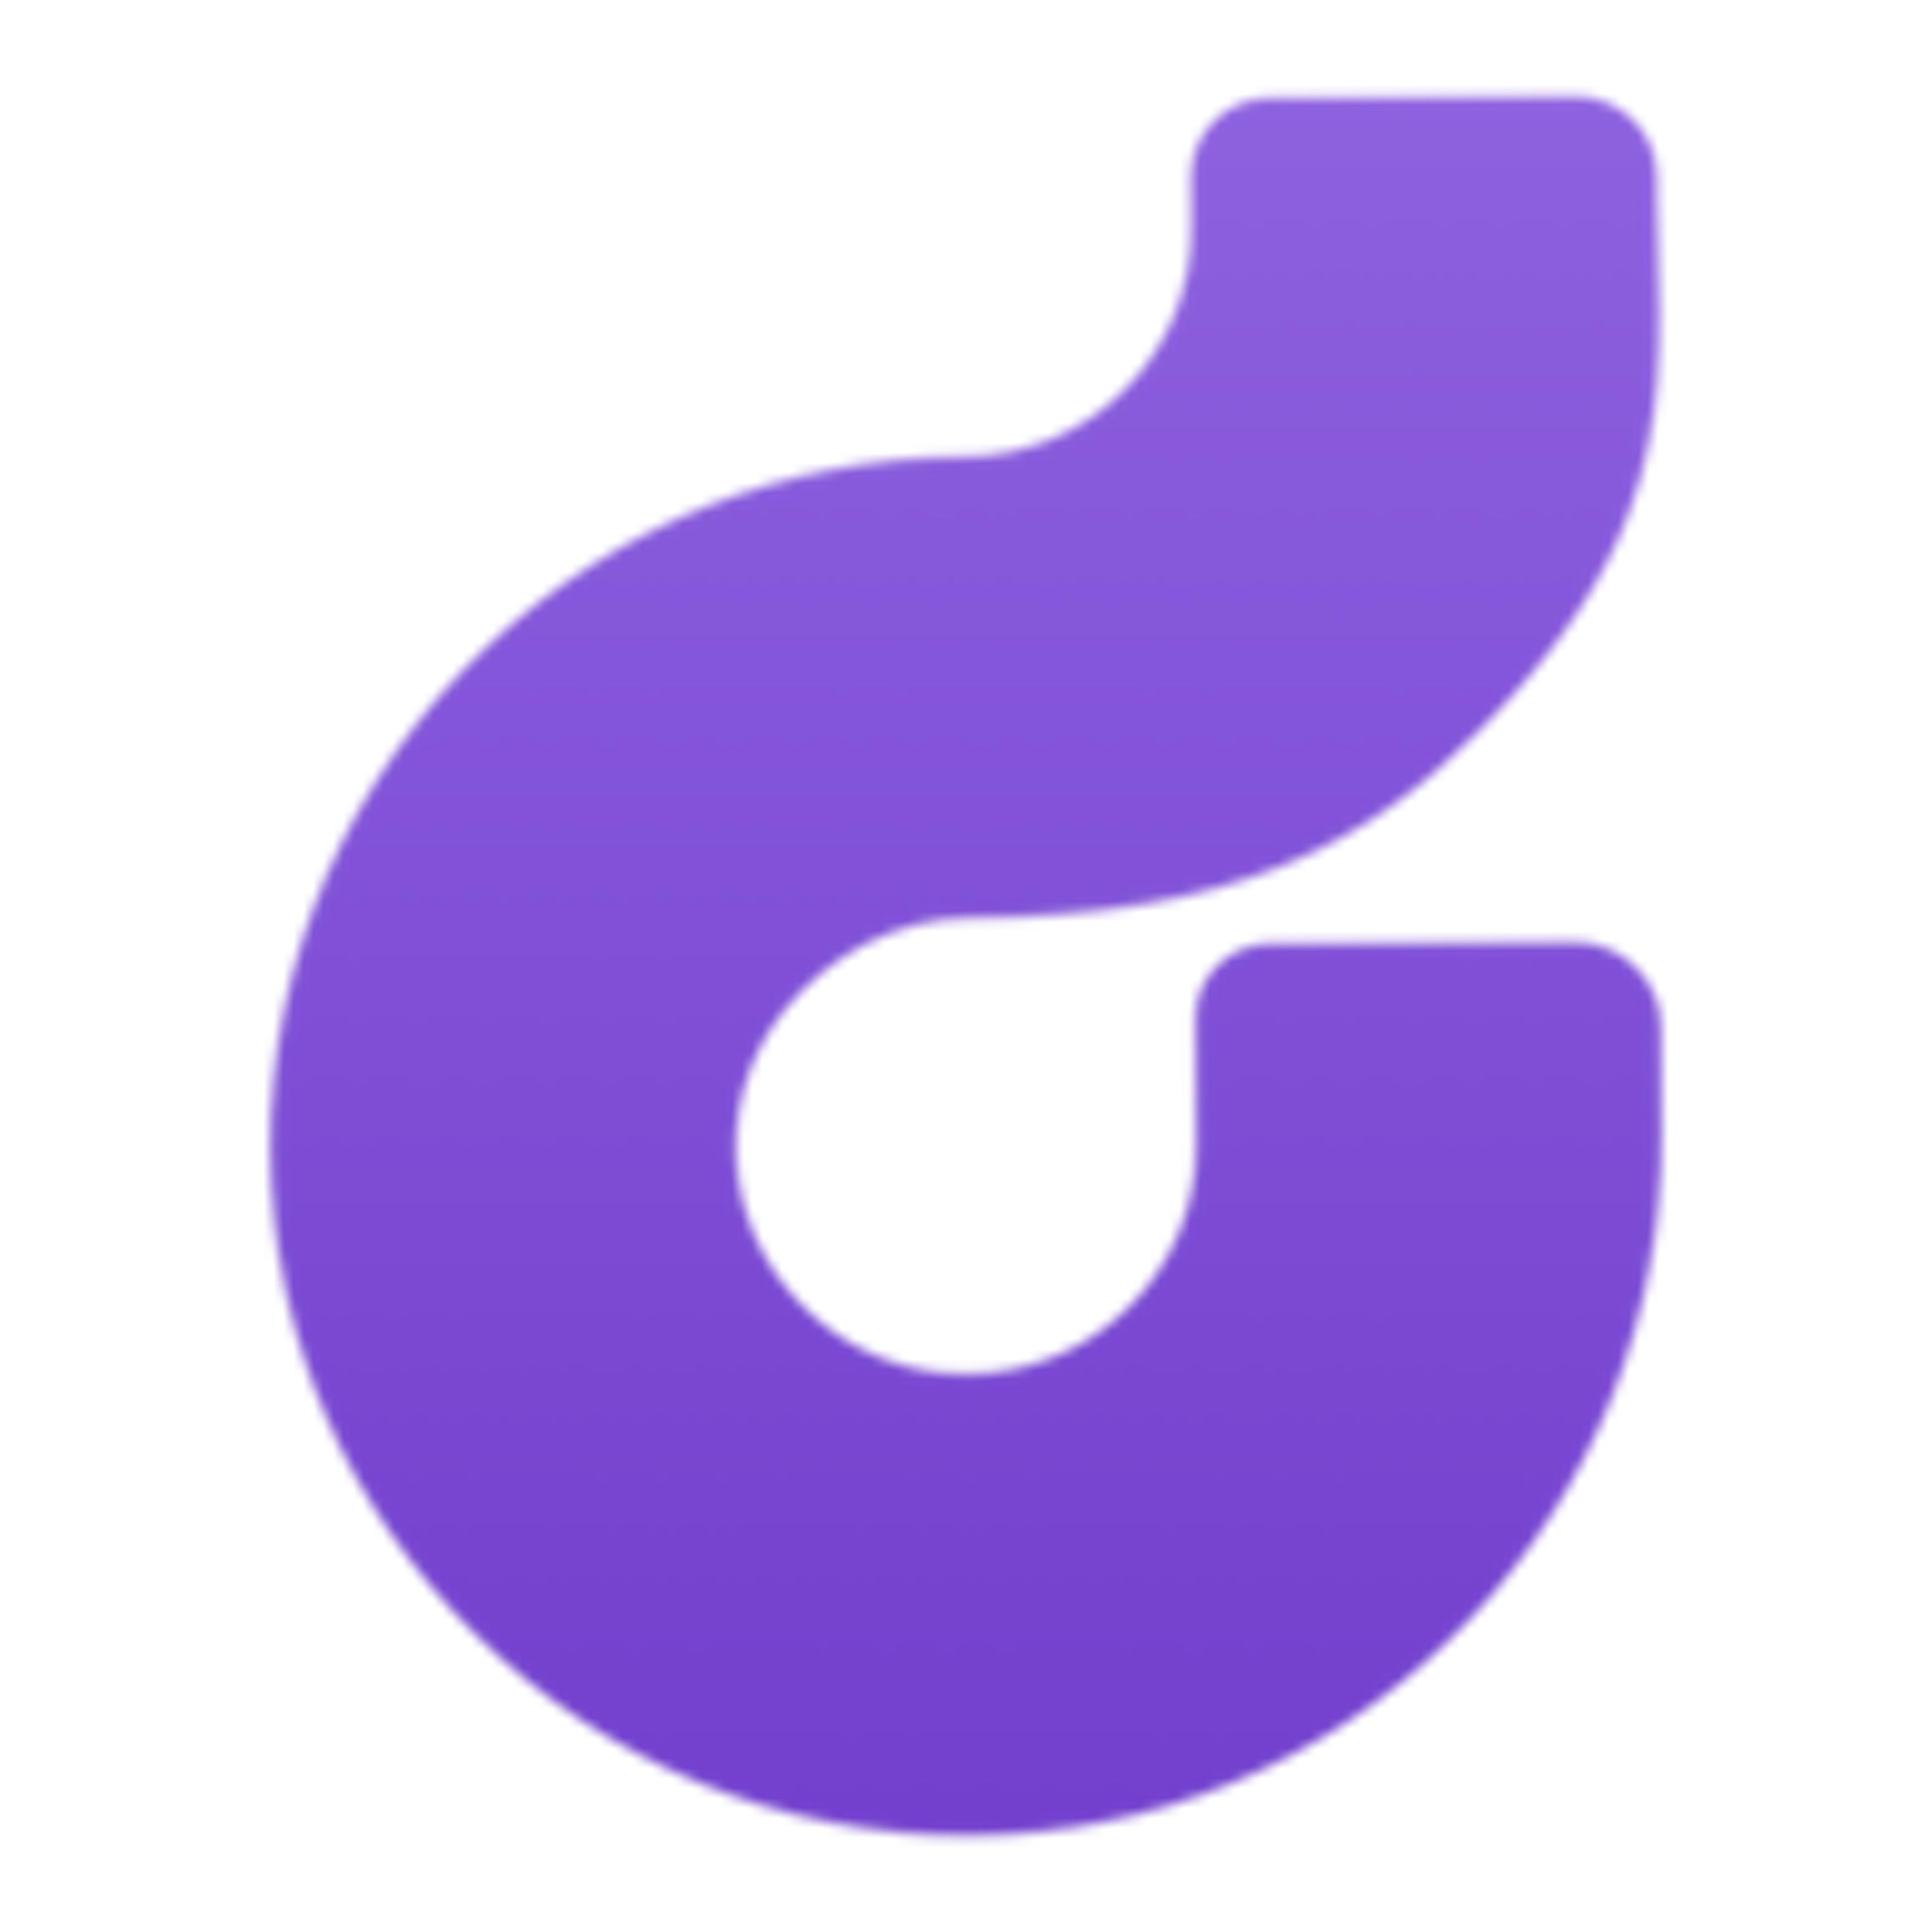 Droplr Logo